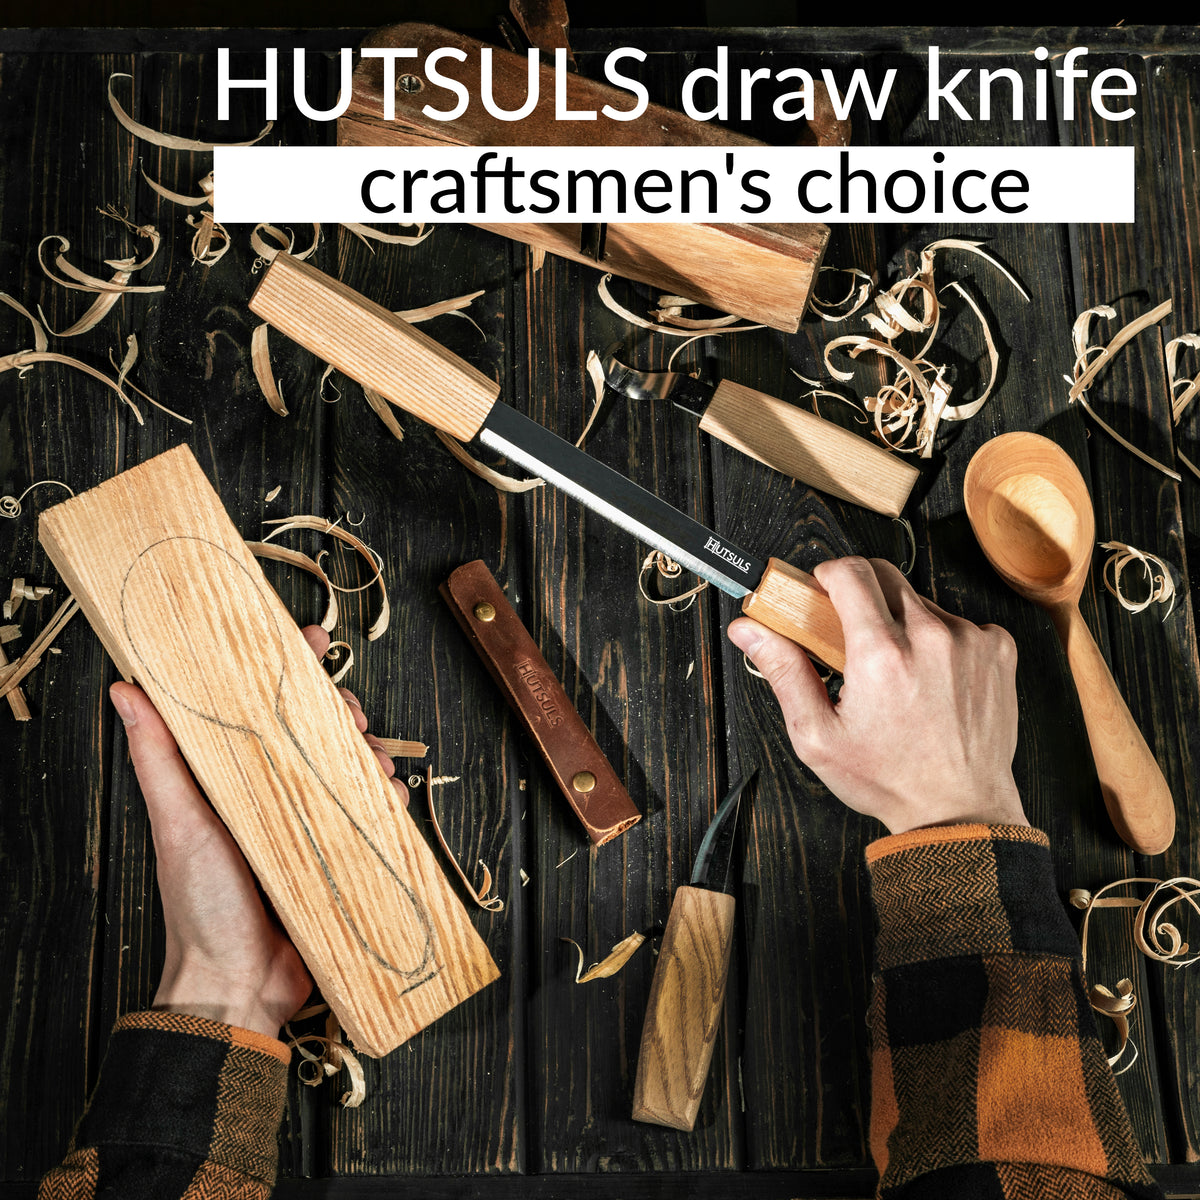 Hutsuls Wood Whittling Kit for Beginners - 8 pcs Razor Sharp Wood